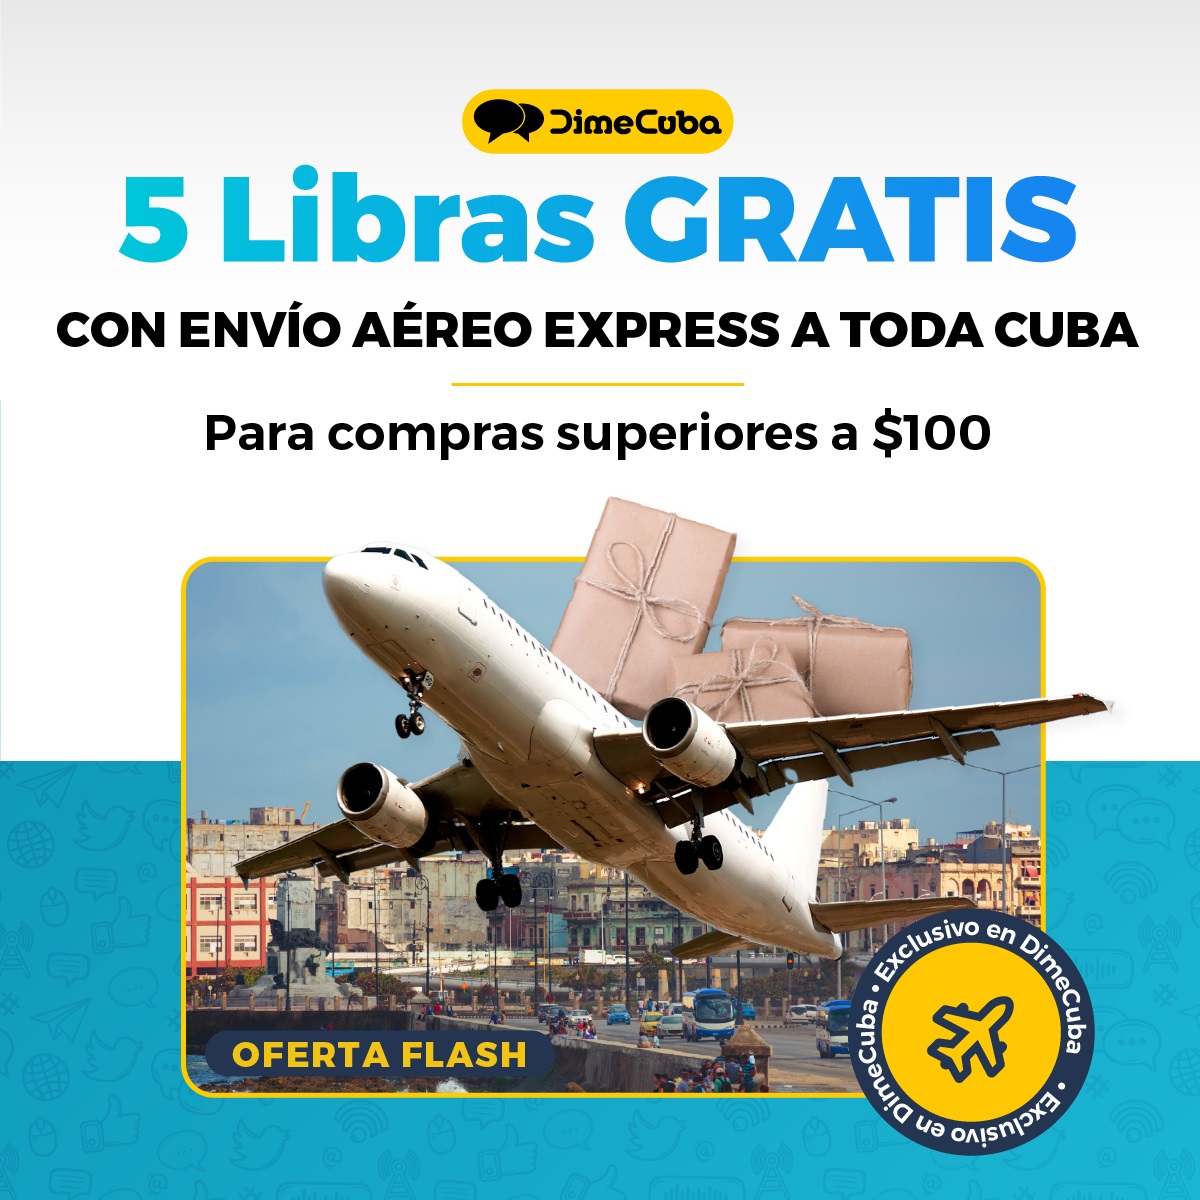 Gana hasta 10 libras para envío aéreo gratuito de productos a Cuba4